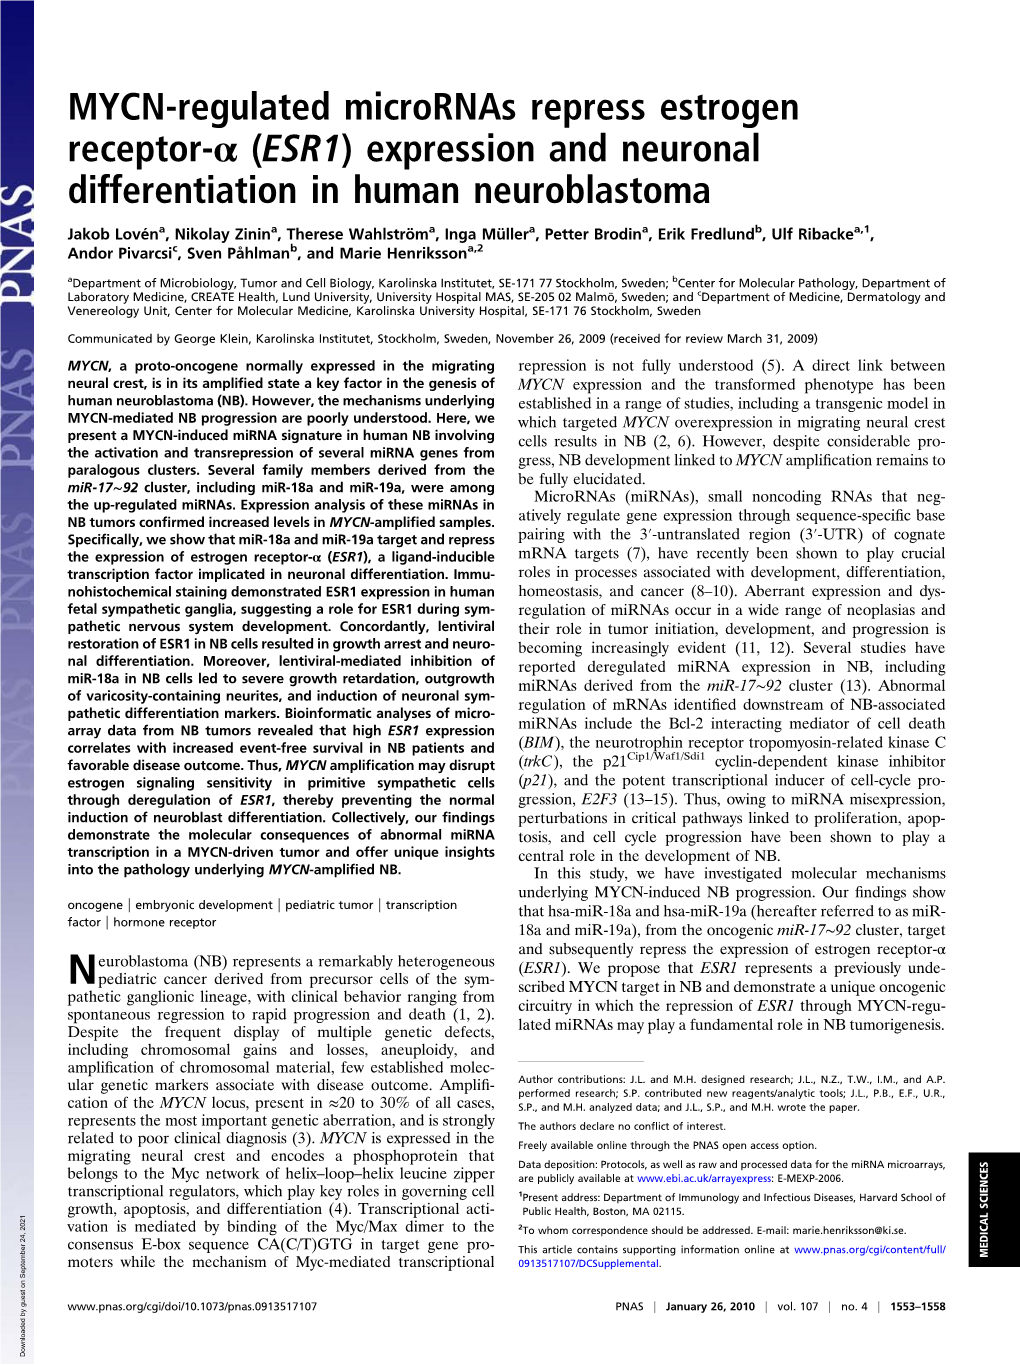 MYCN-Regulated Micrornas Repress Estrogen Receptor-Α (ESR1) Expression and Neuronal Differentiation in Human Neuroblastoma